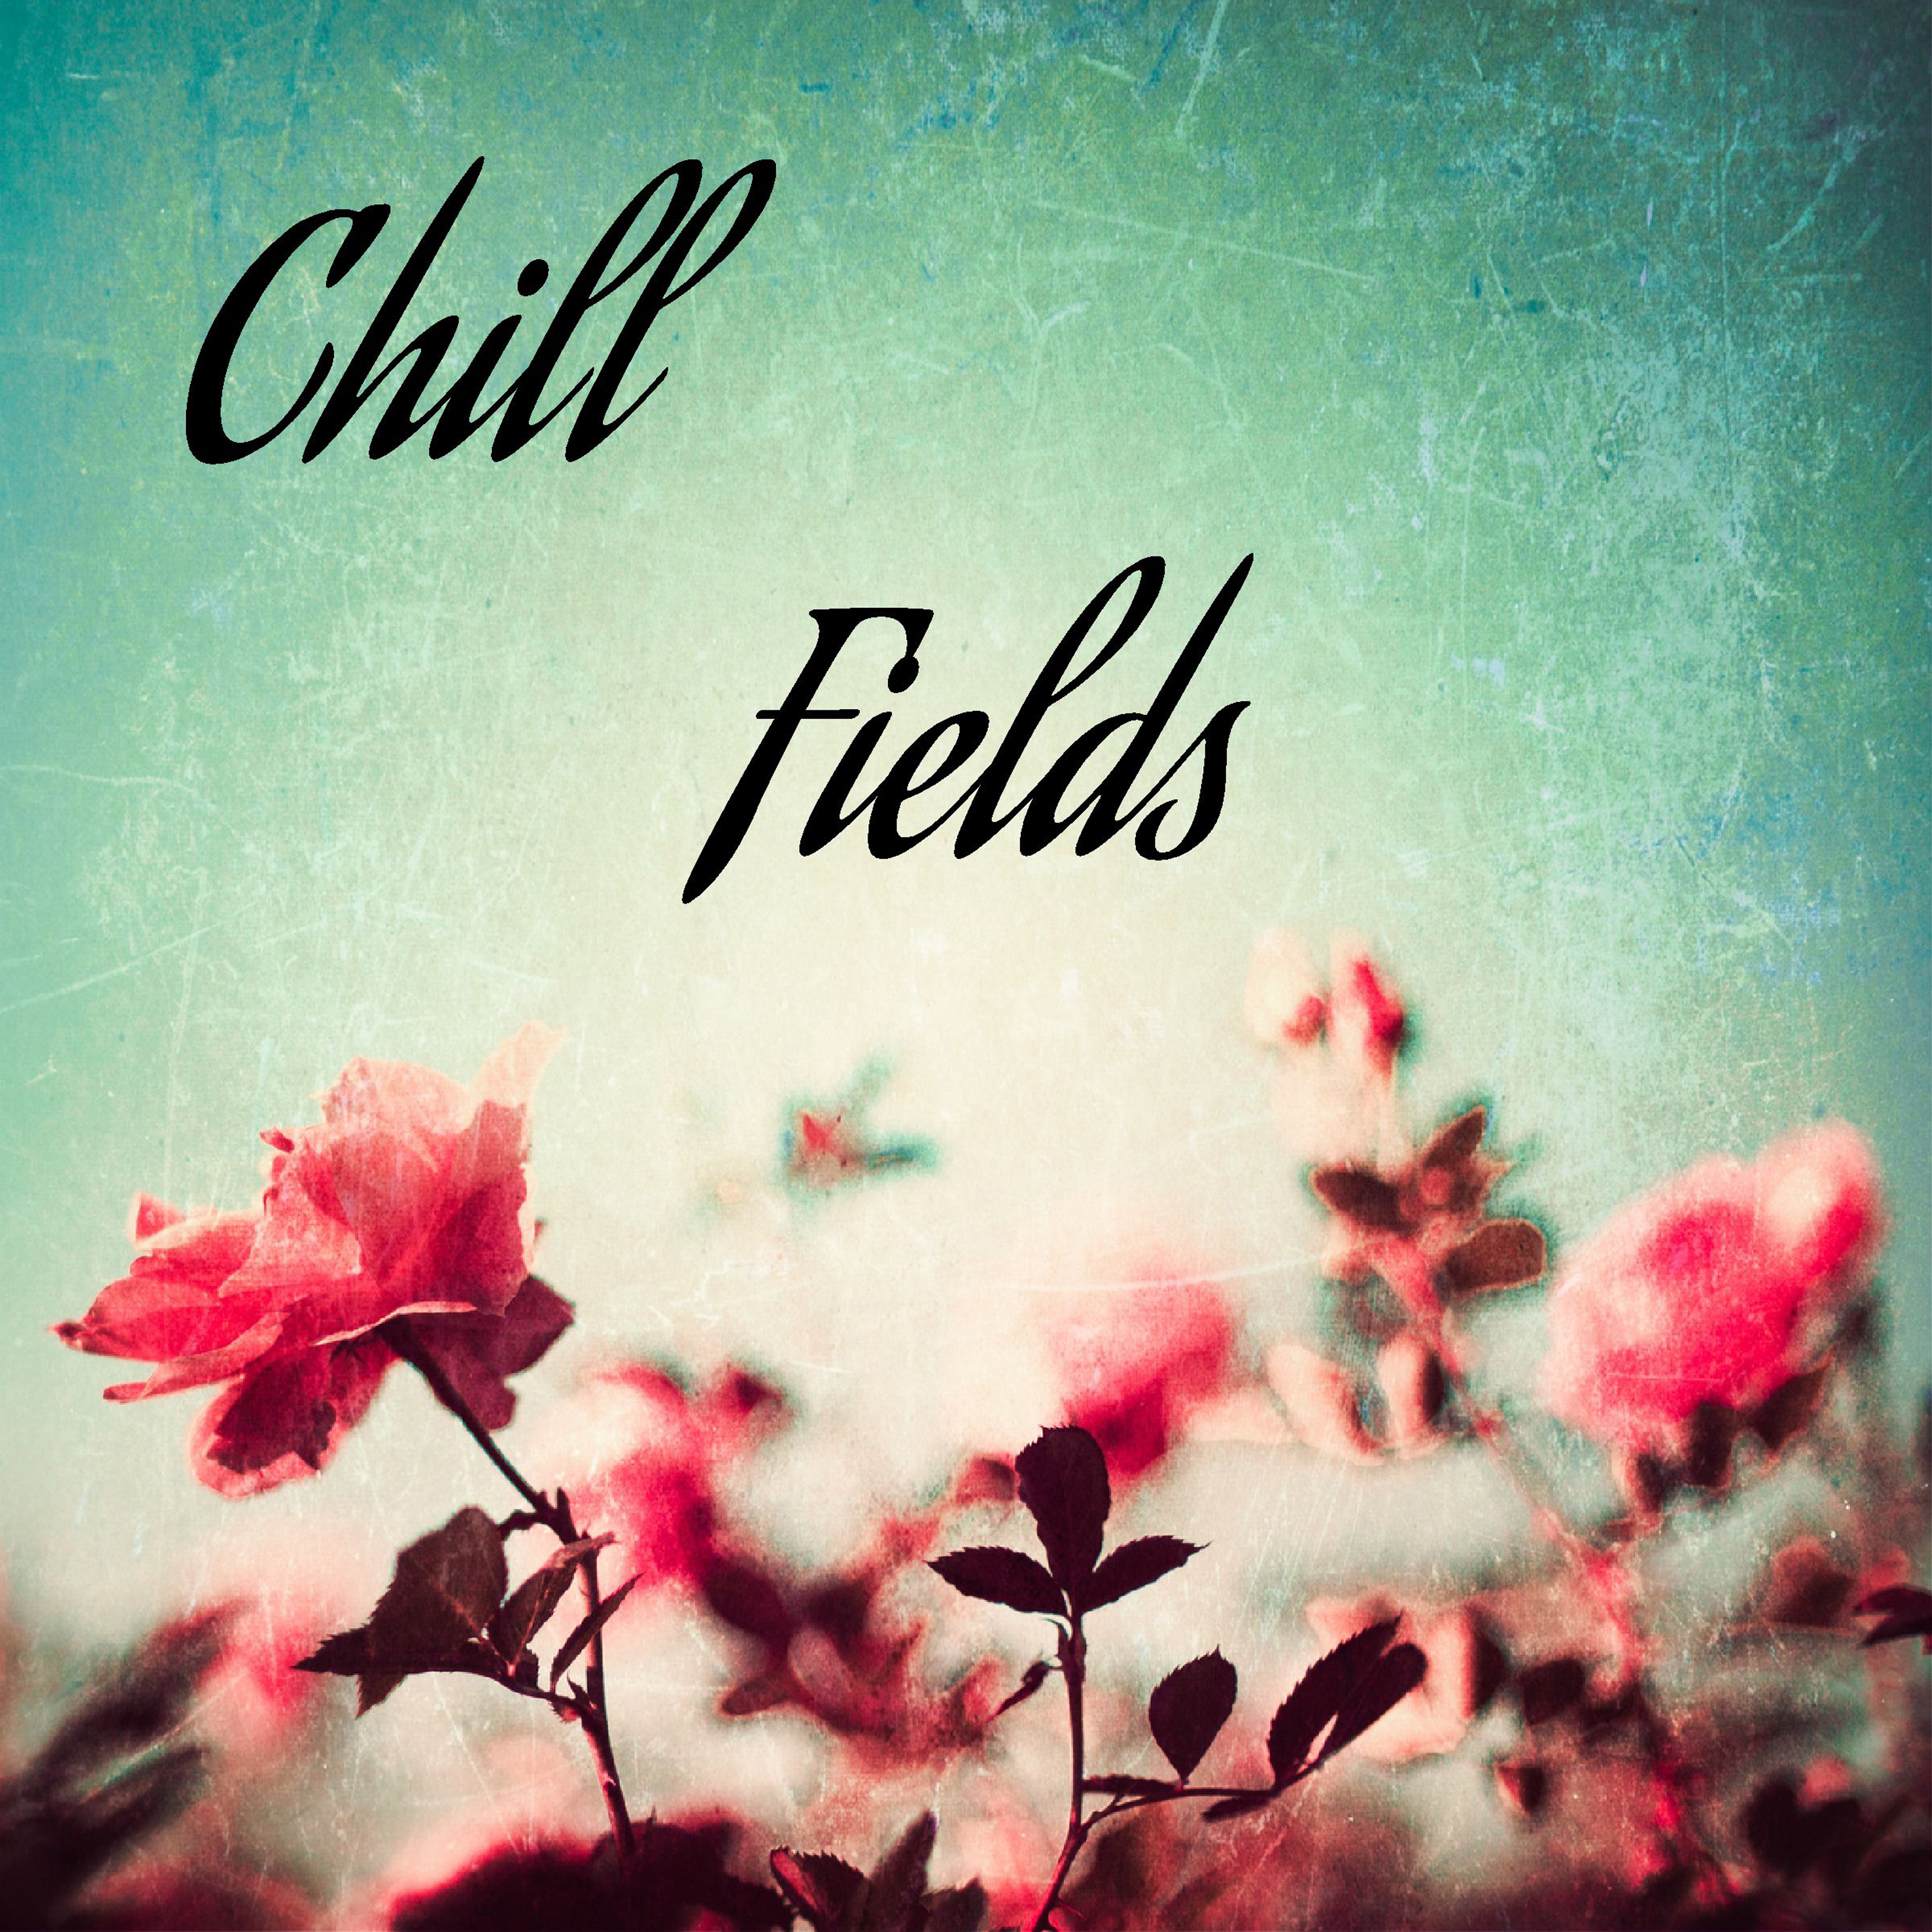 Chill Fields